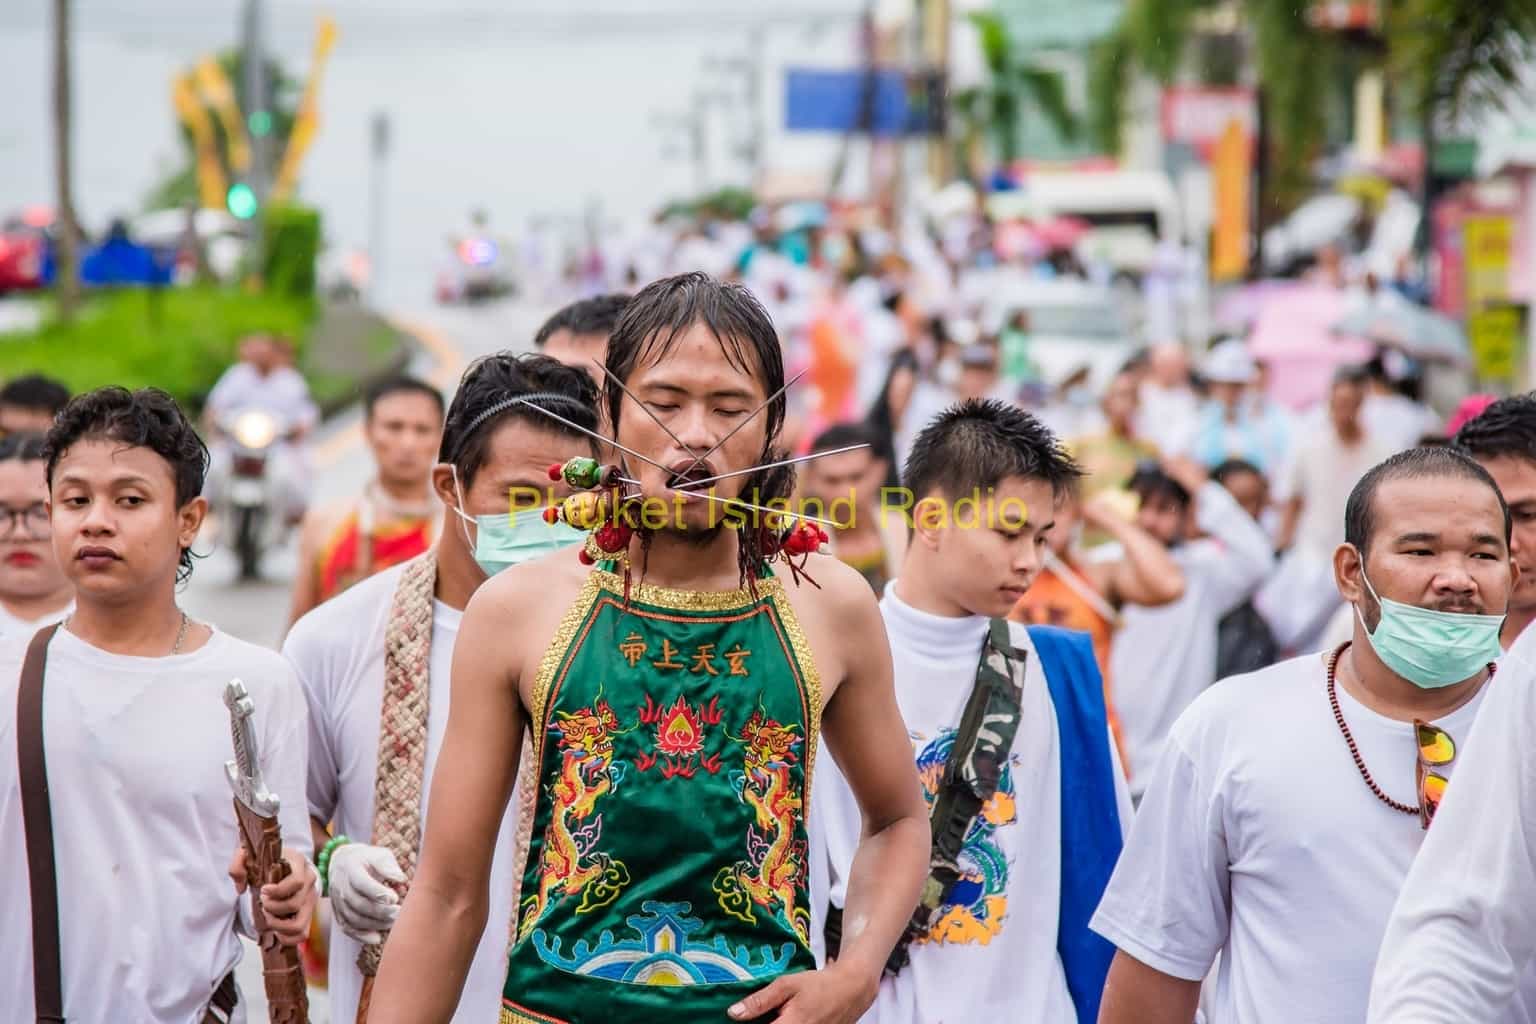 First Parade of the 2016 Phuket Vegetarian Festival